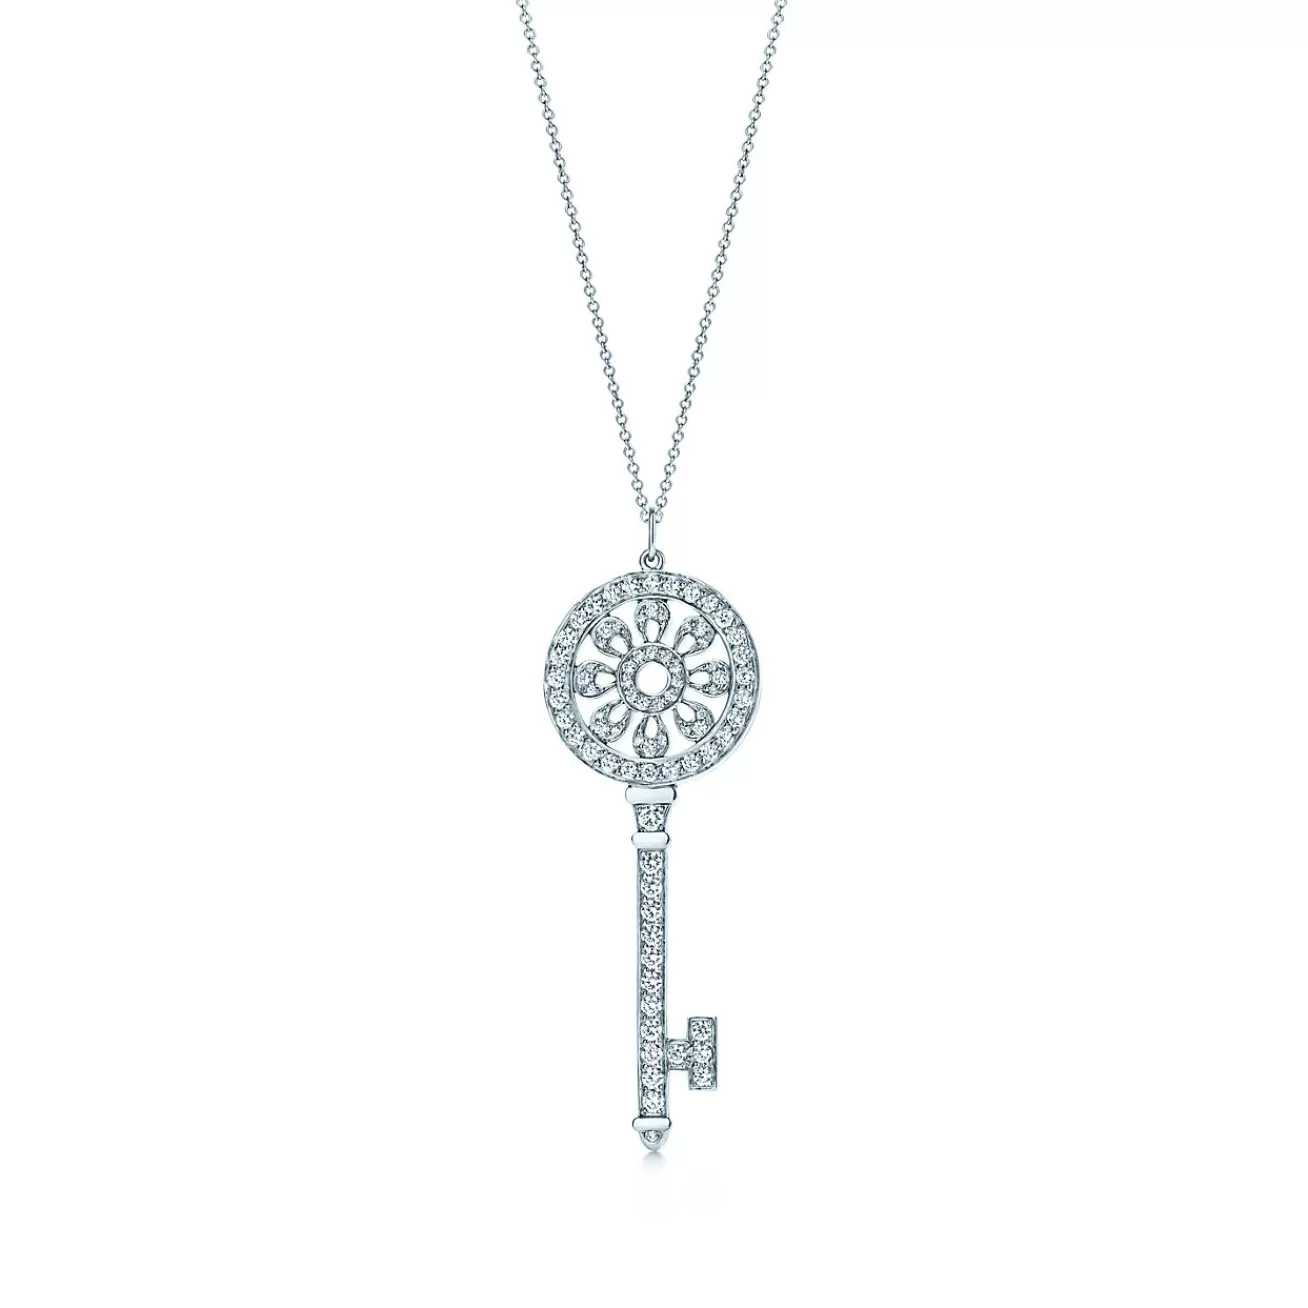 Tiffany & Co. Tiffany Keys petals key pendant with diamonds in platinum on a chain. | ^ Necklaces & Pendants | Platinum Jewelry